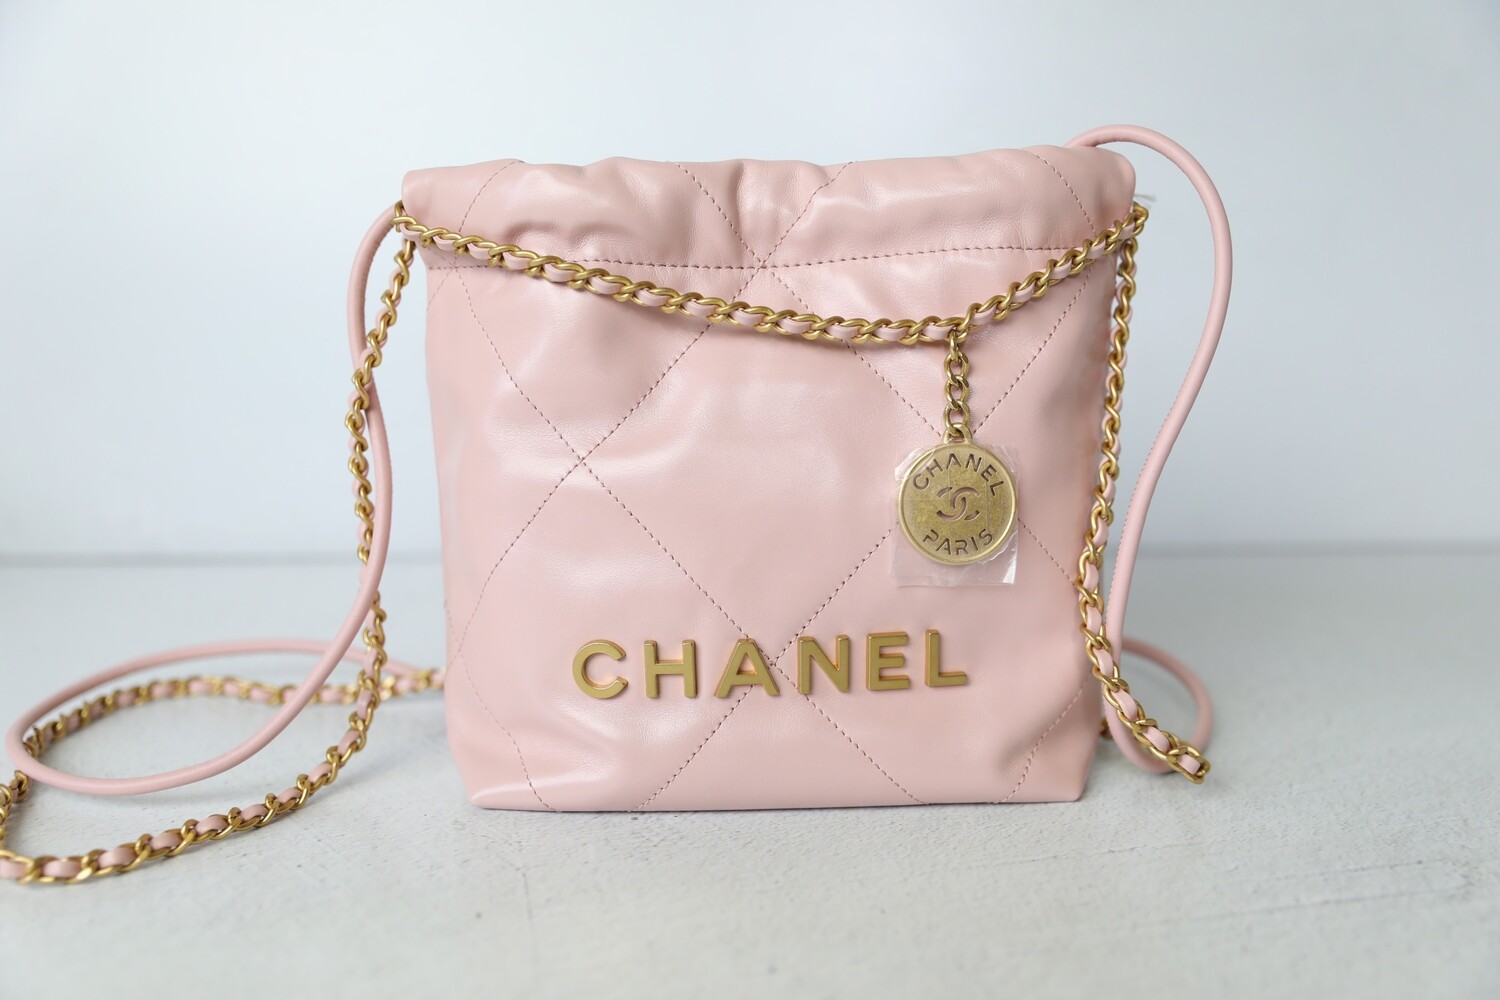 Chanel 22 Mini Tote, Pink Leather with Gold Hardware, New in Box WA001 -  Julia Rose Boston